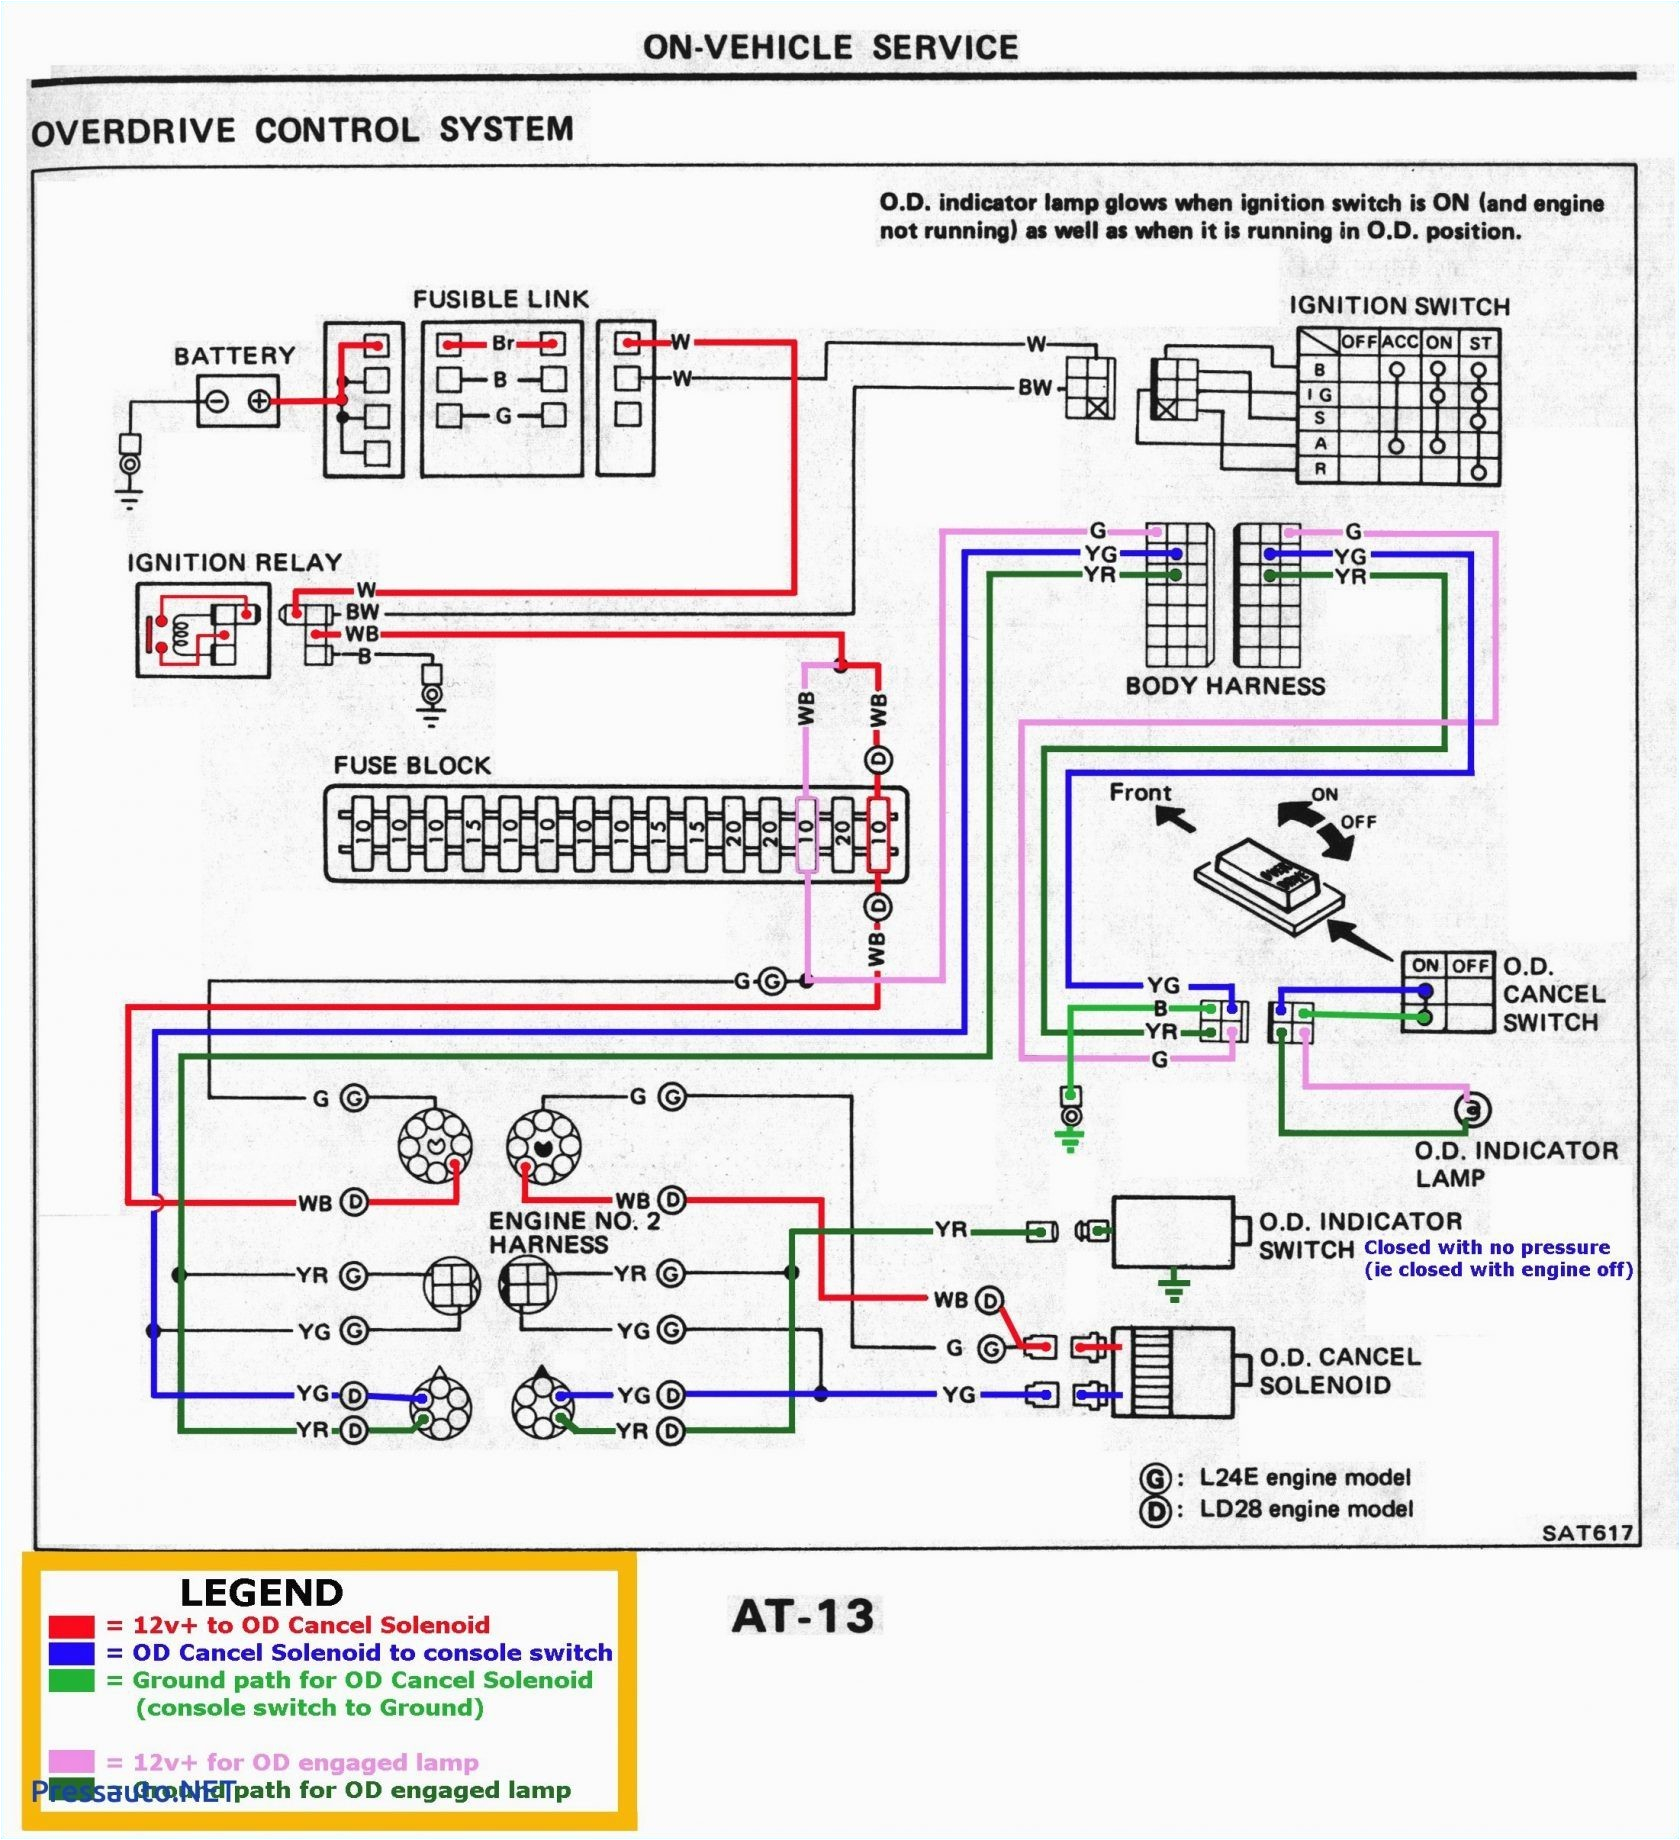 bullhorn wiring diagram wiring diagram load bullhorn wiring diagram